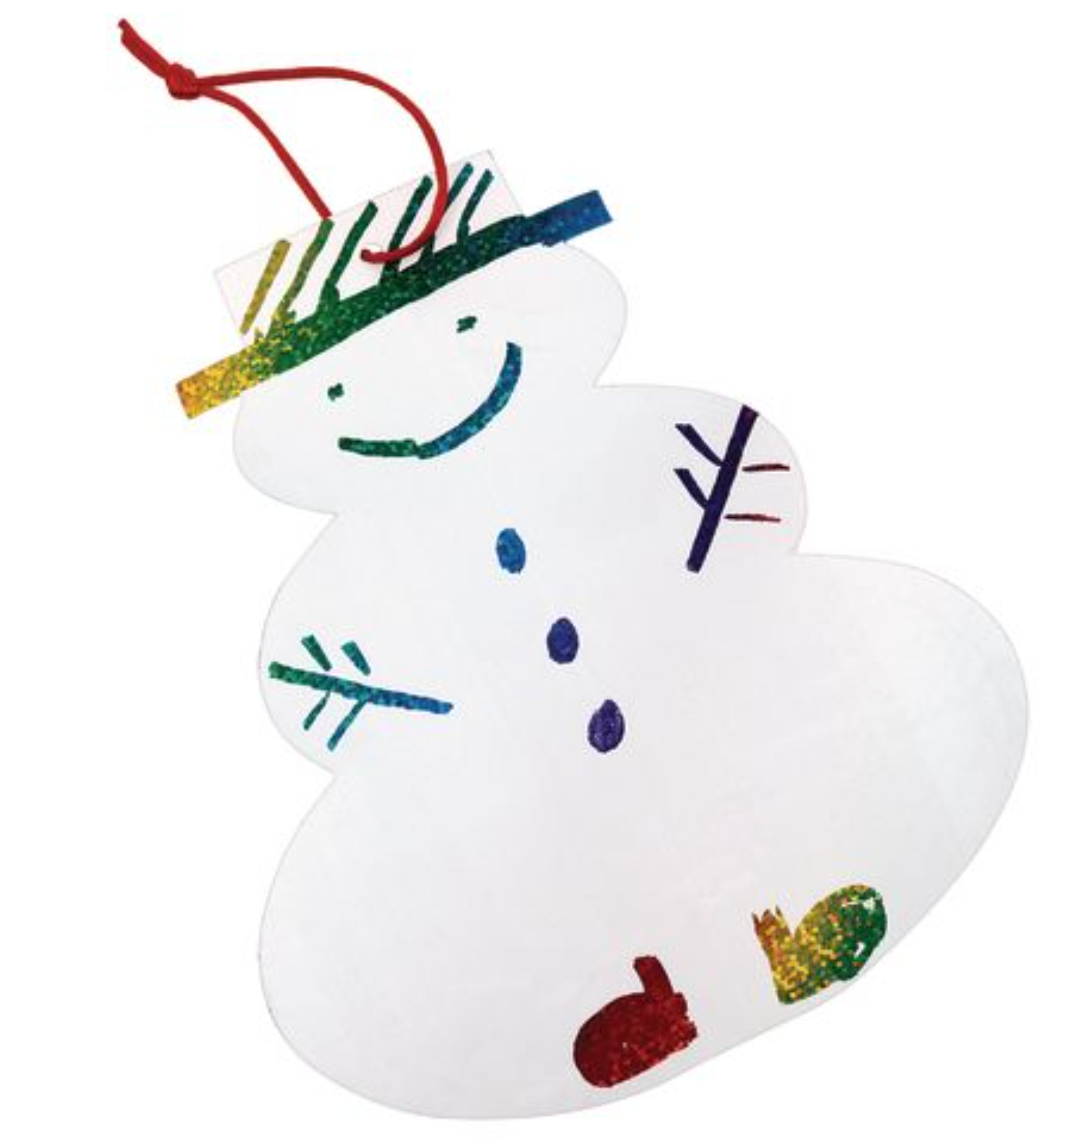 Etch art snowman craft for elementary school